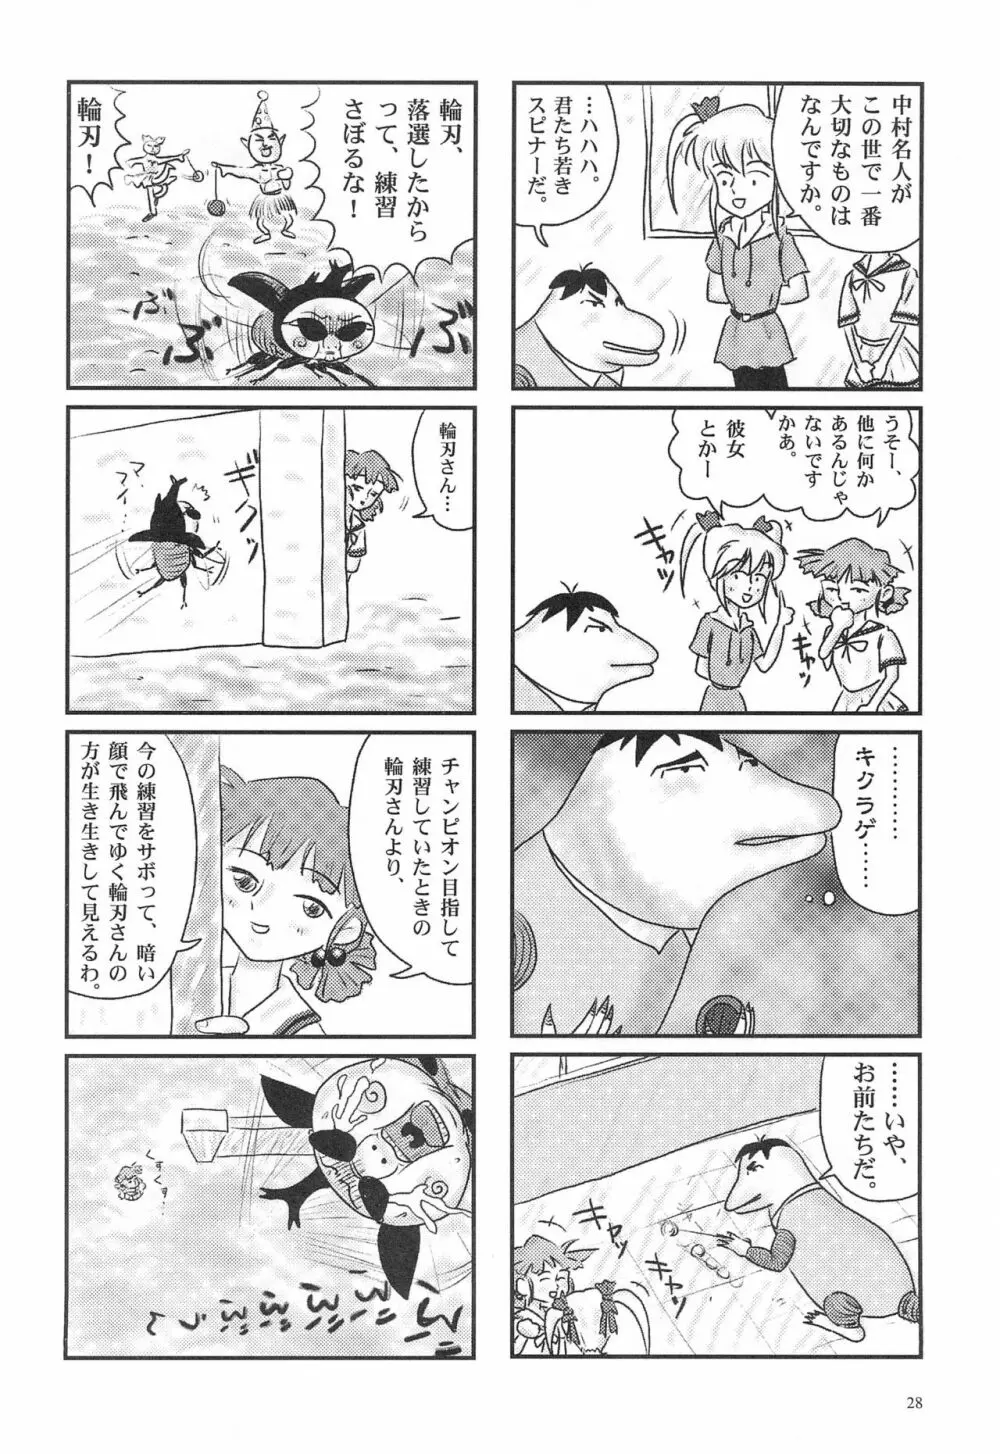 閃虹丸作品集 Vol.1 28ページ